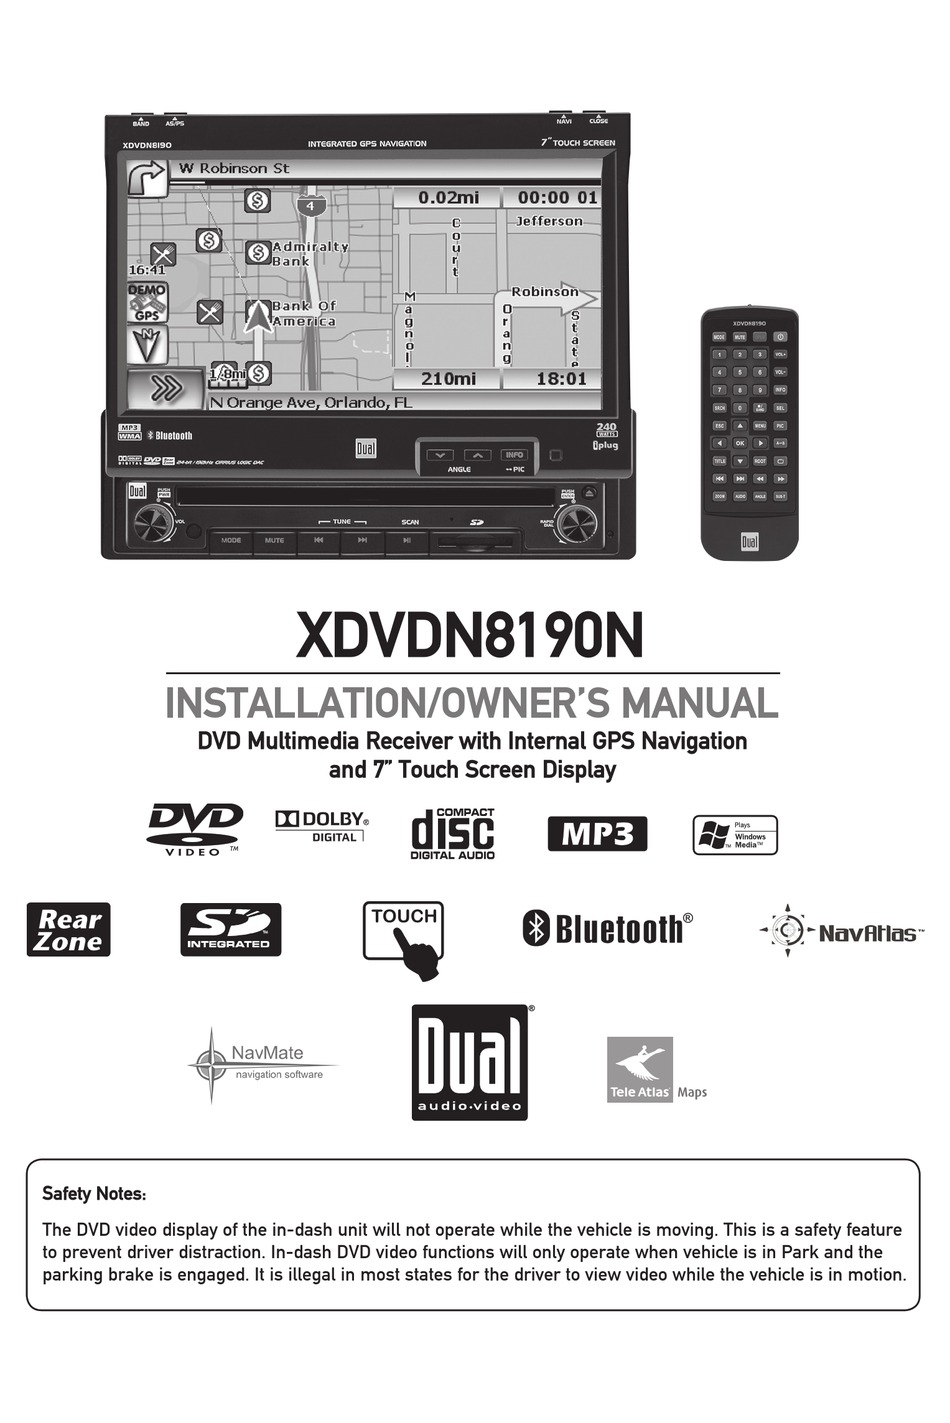 DUAL XDVDN8190N INSTALLATION & OWNER'S MANUAL Pdf Download | ManualsLib